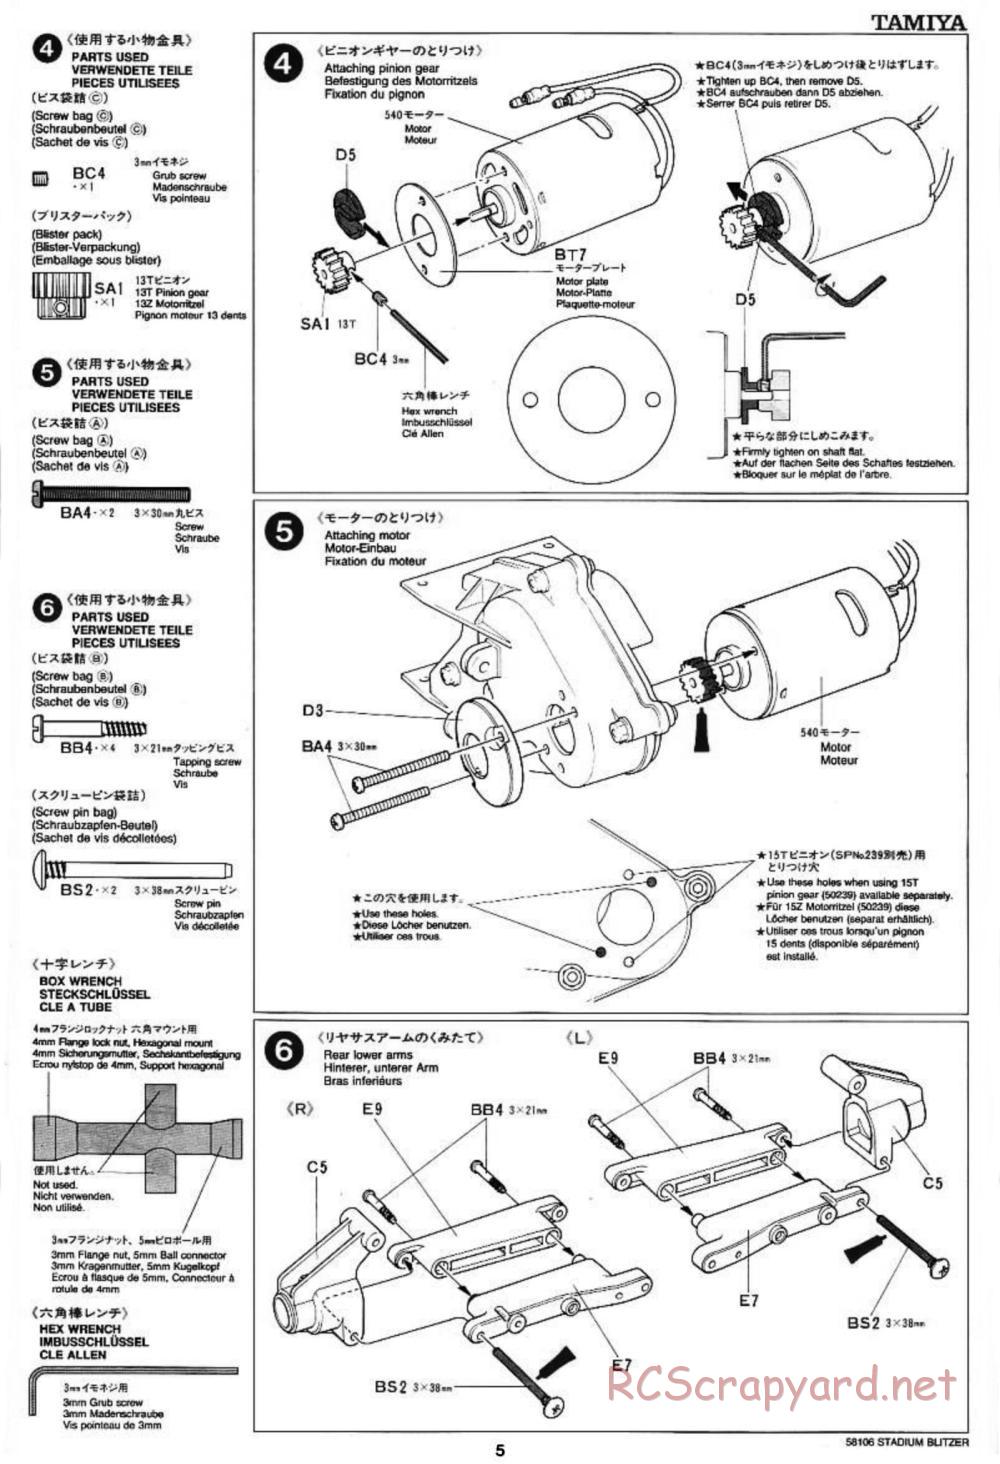 Tamiya - Stadium Blitzer Chassis - Manual - Page 5